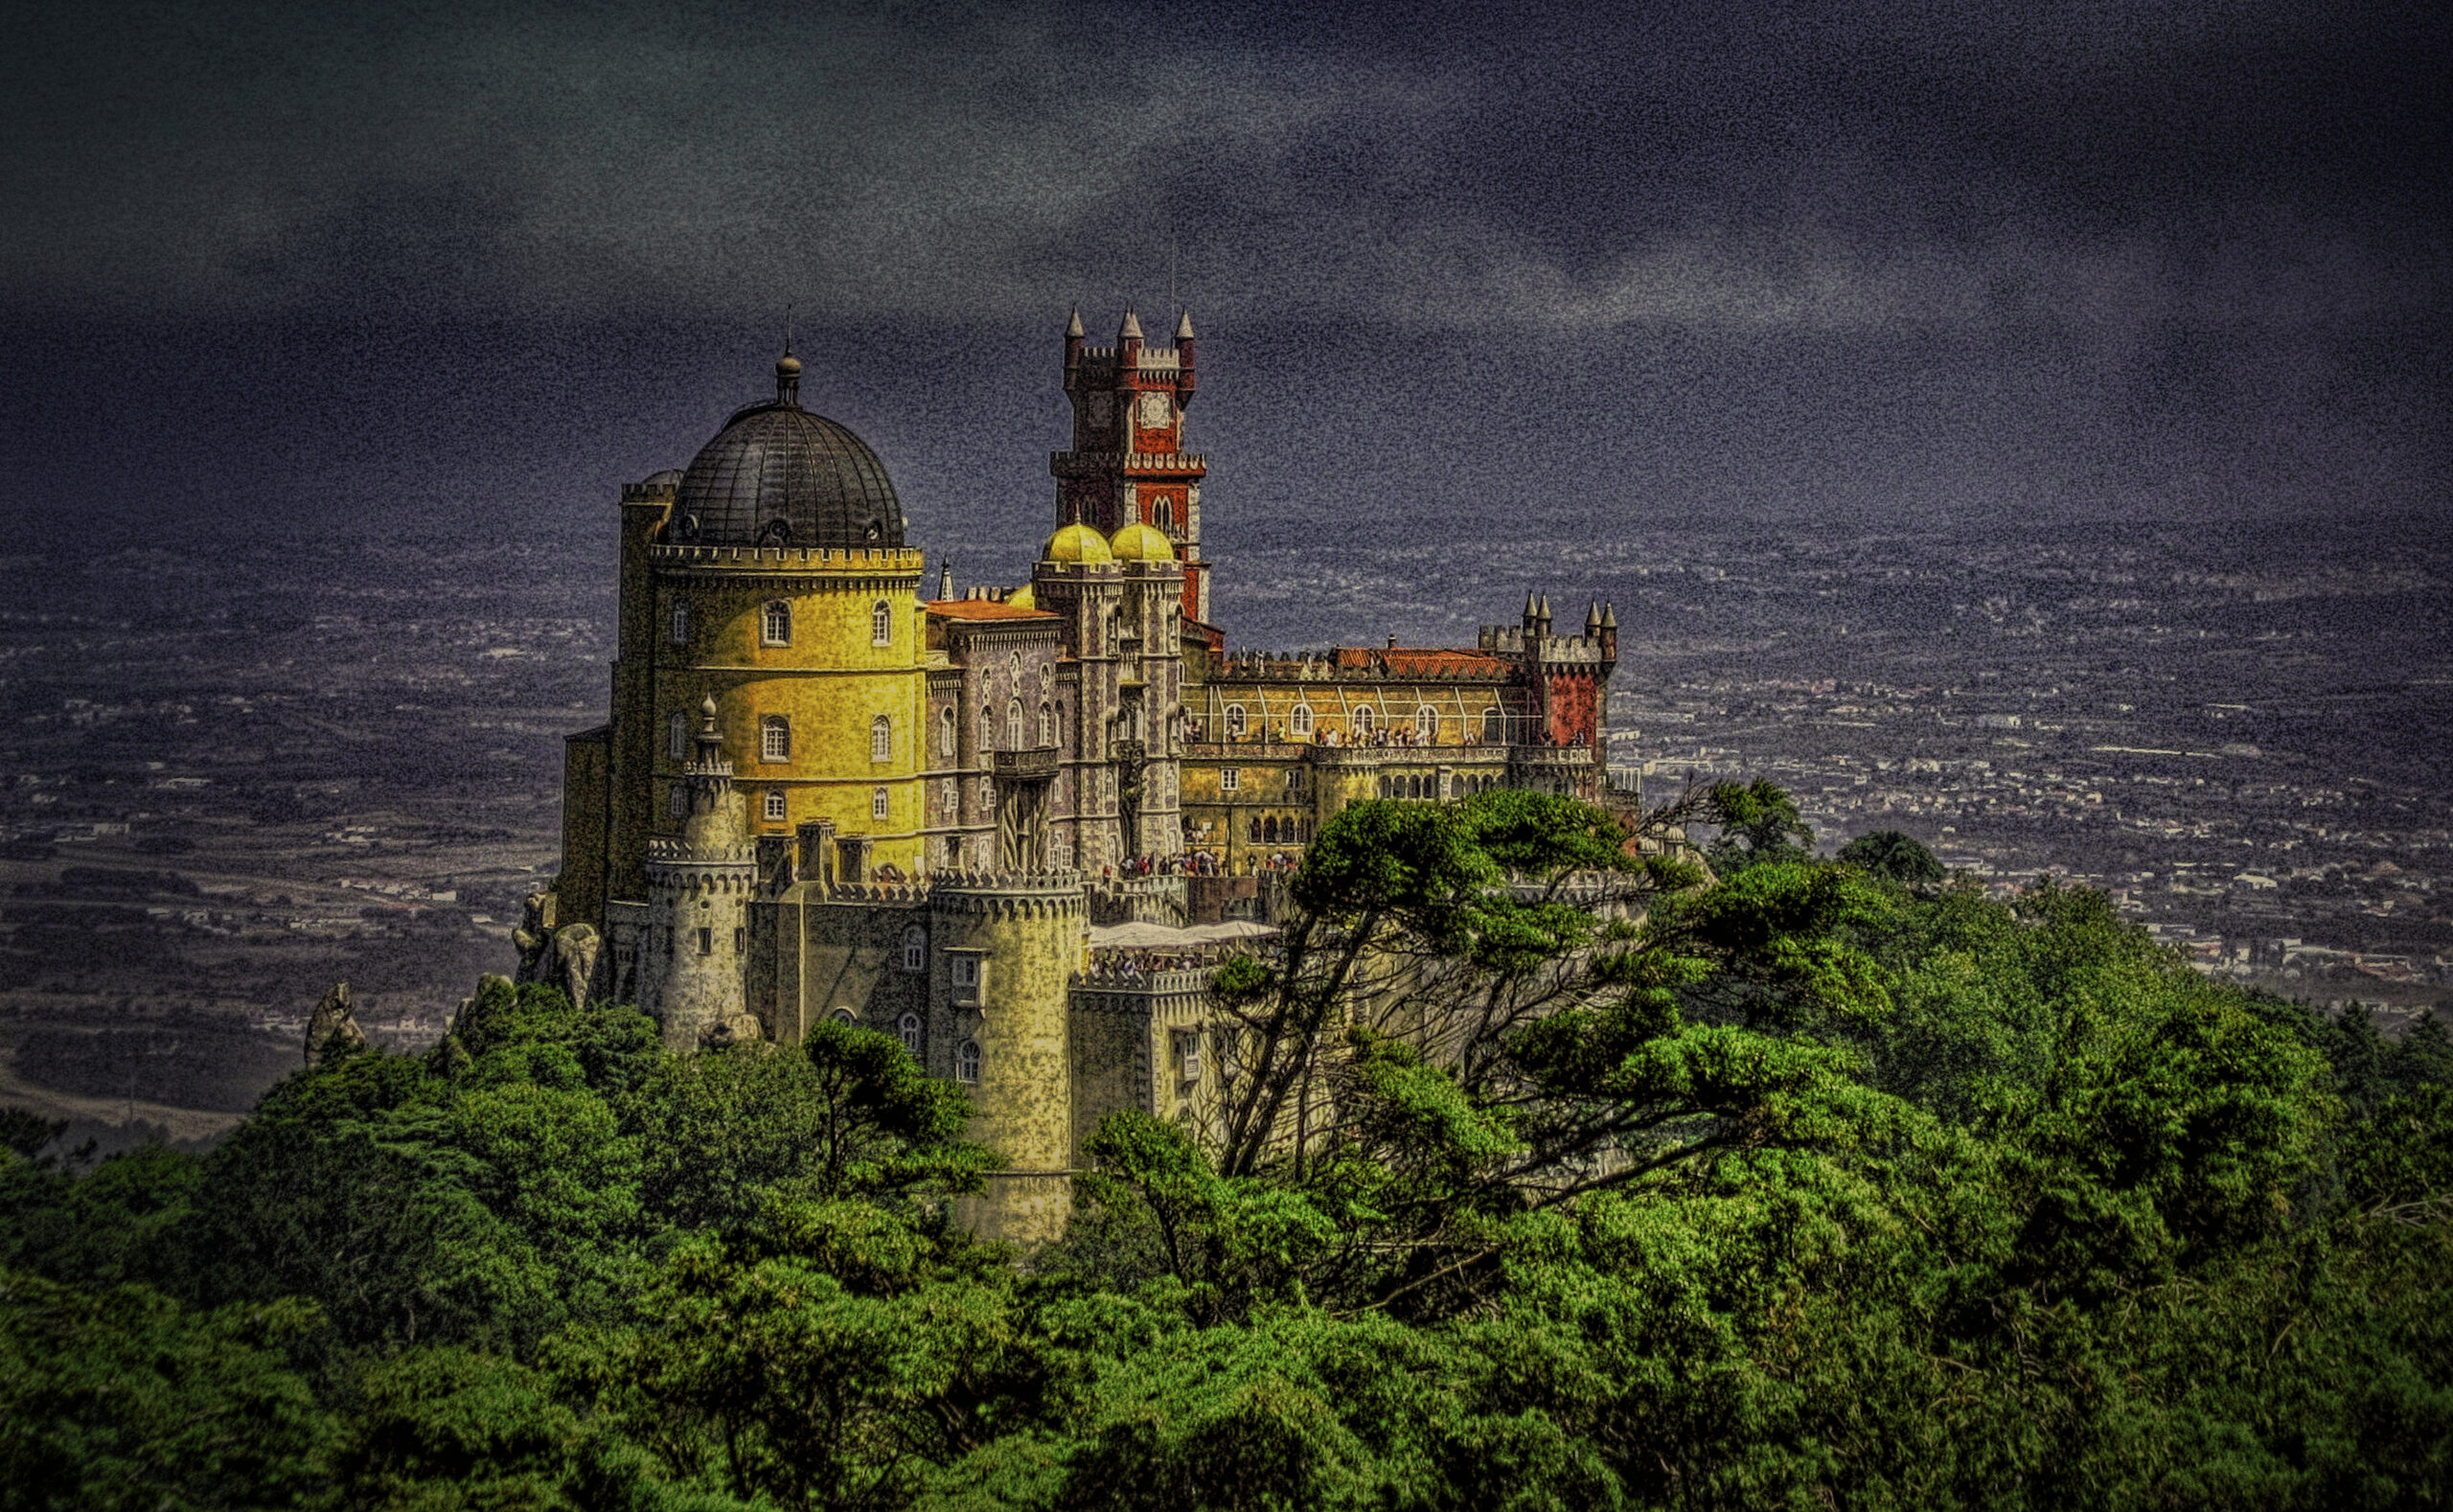 Large castle on a hilltop in Sintra, Portuga;